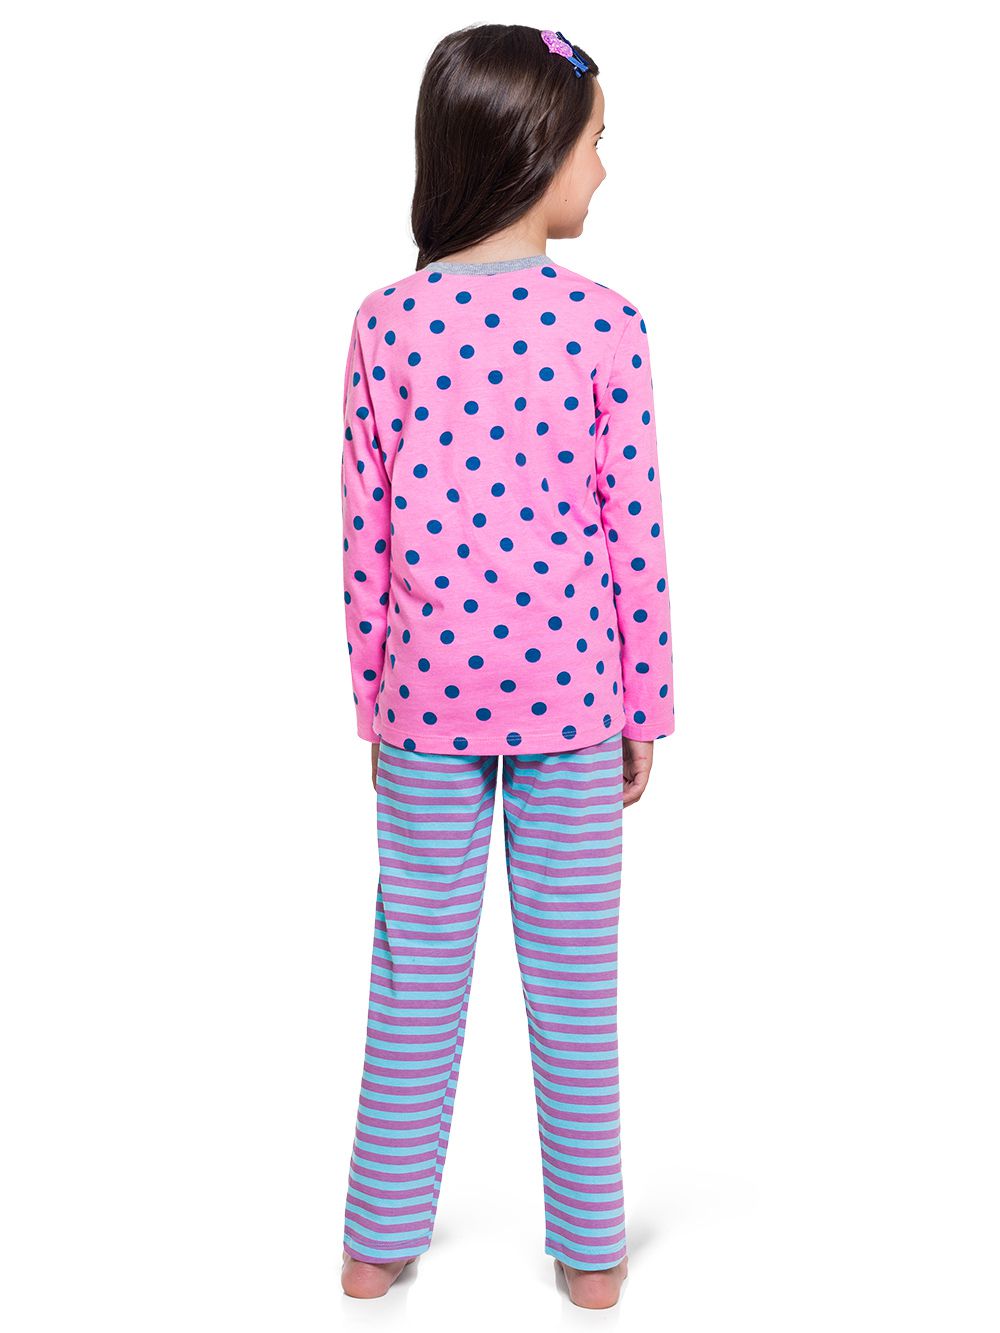 Pijama infantil menina 3 peças manga longa manga curta calça